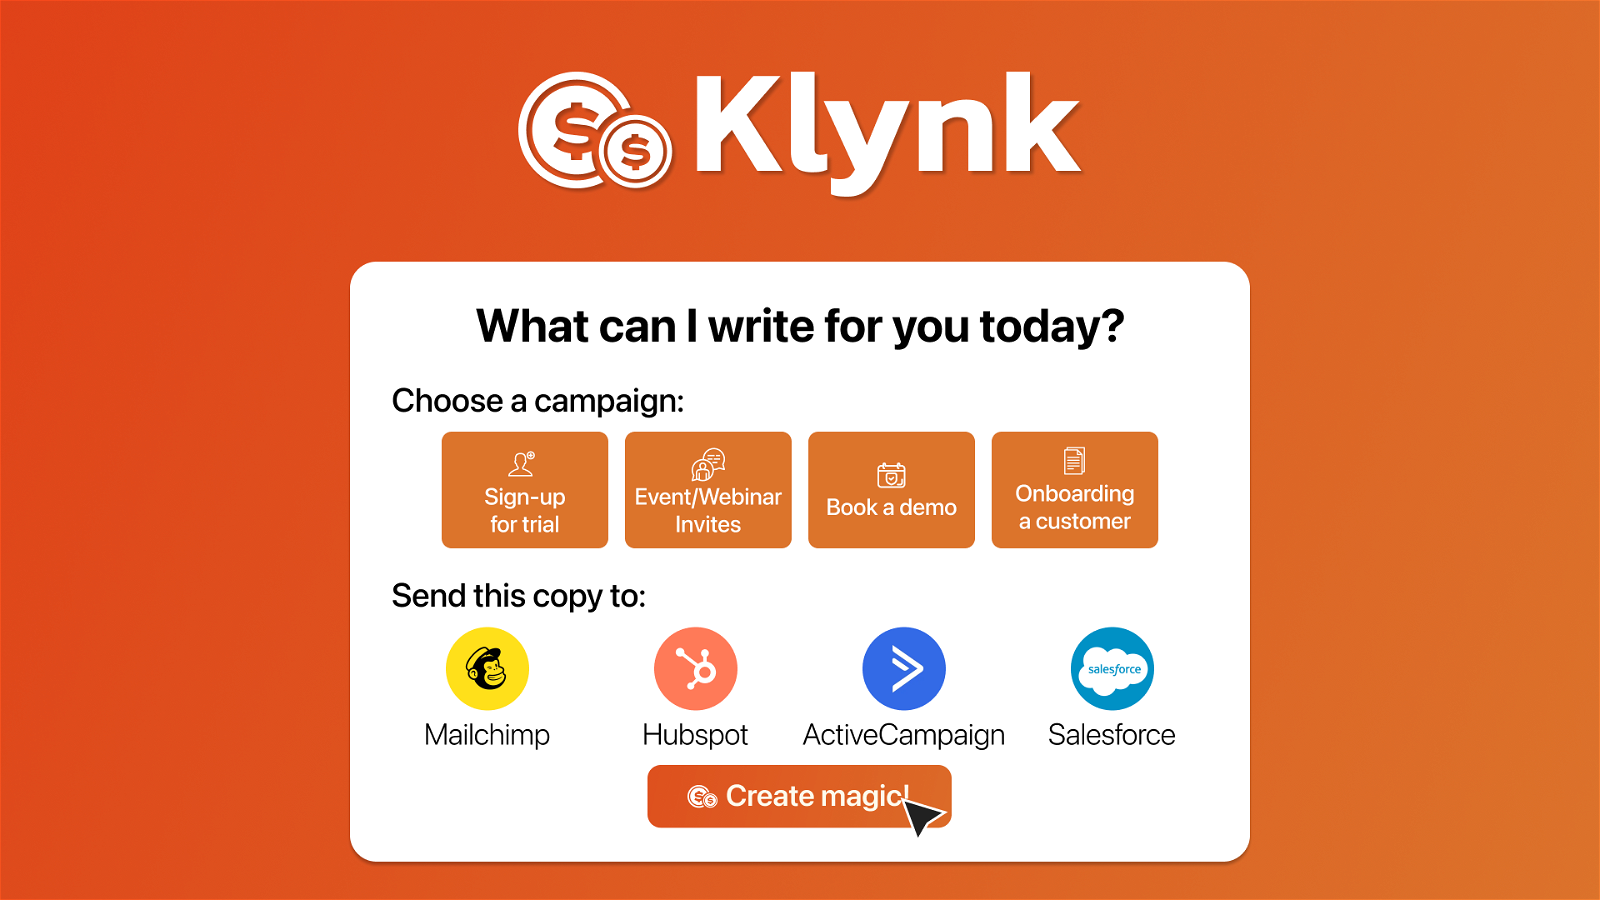 Klynk website